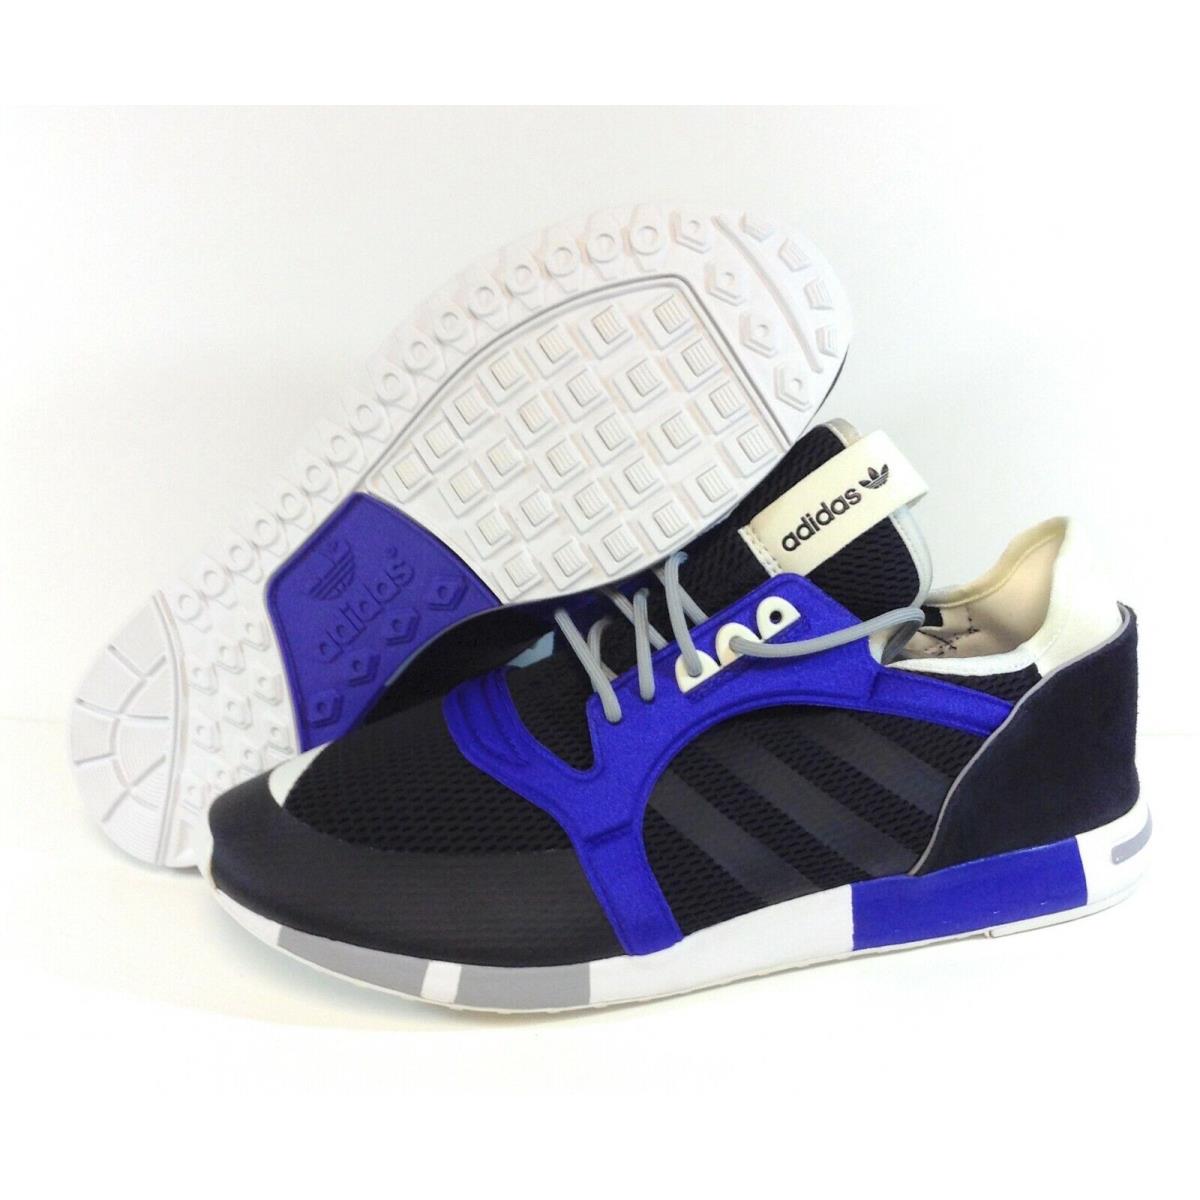 Mens Adidas Boston Super CC B25842 Black Purple 2015 Deadstock Sneakers Shoes